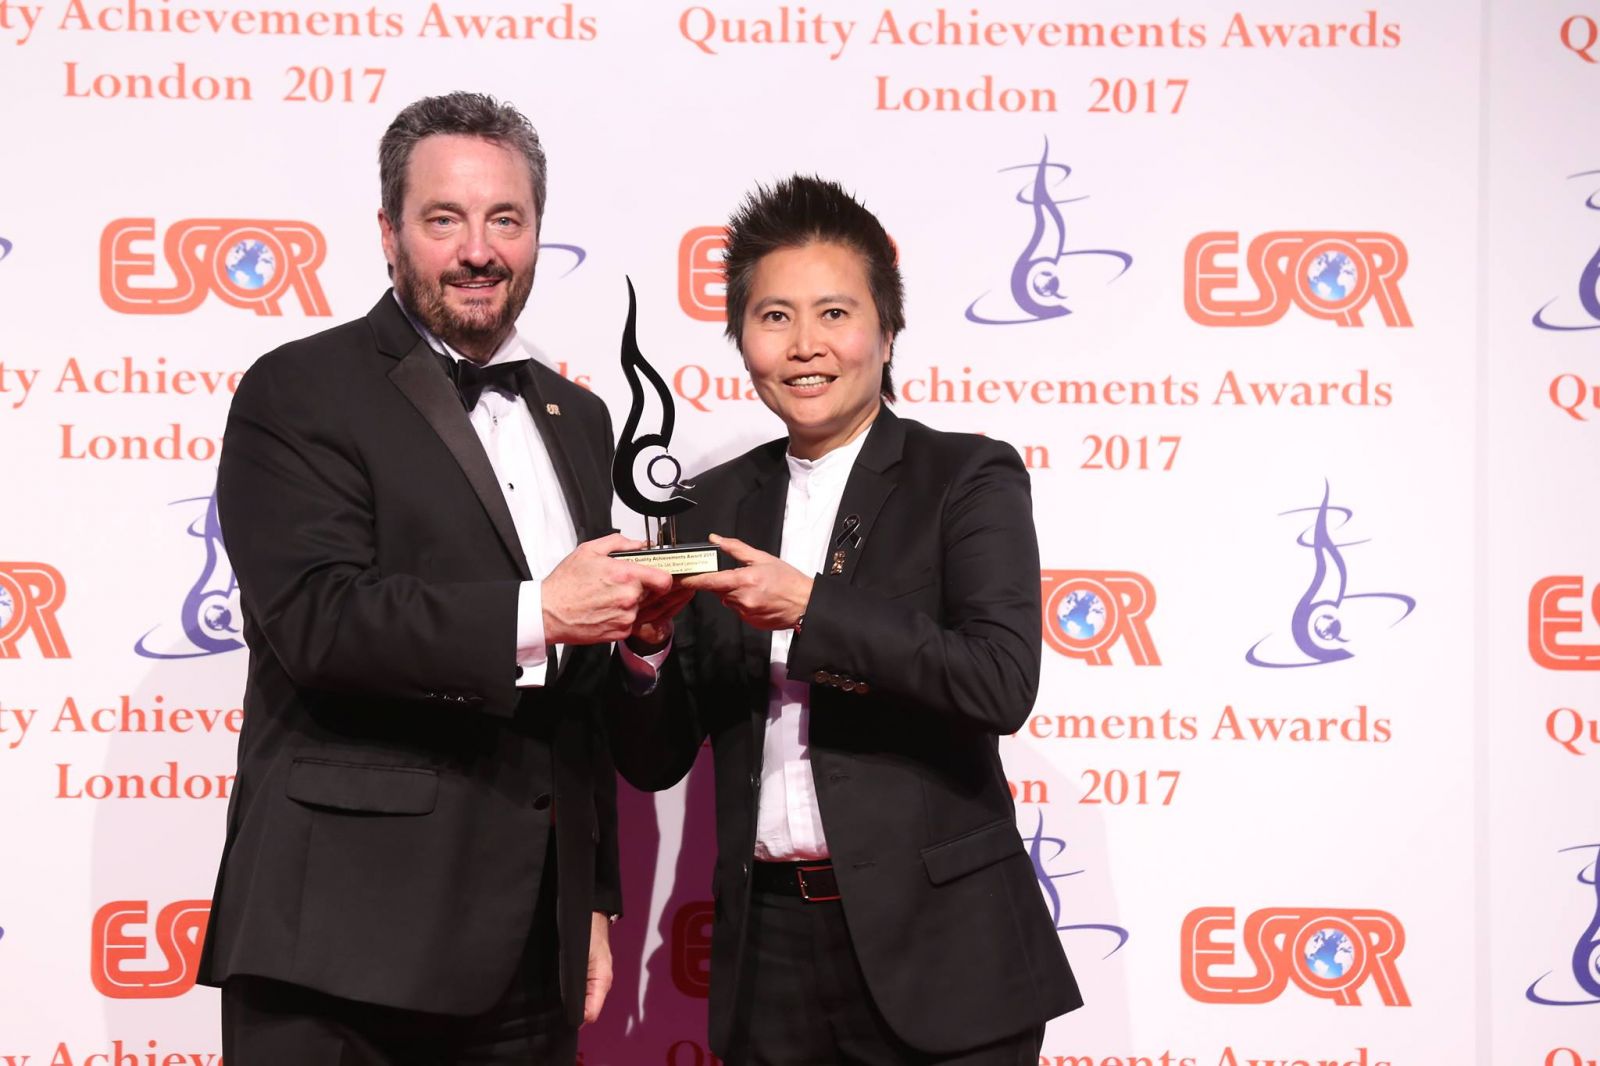 Lamina won the prize. Best internal management, "ESQR’s Quality Achievements Awards 2017" in London.